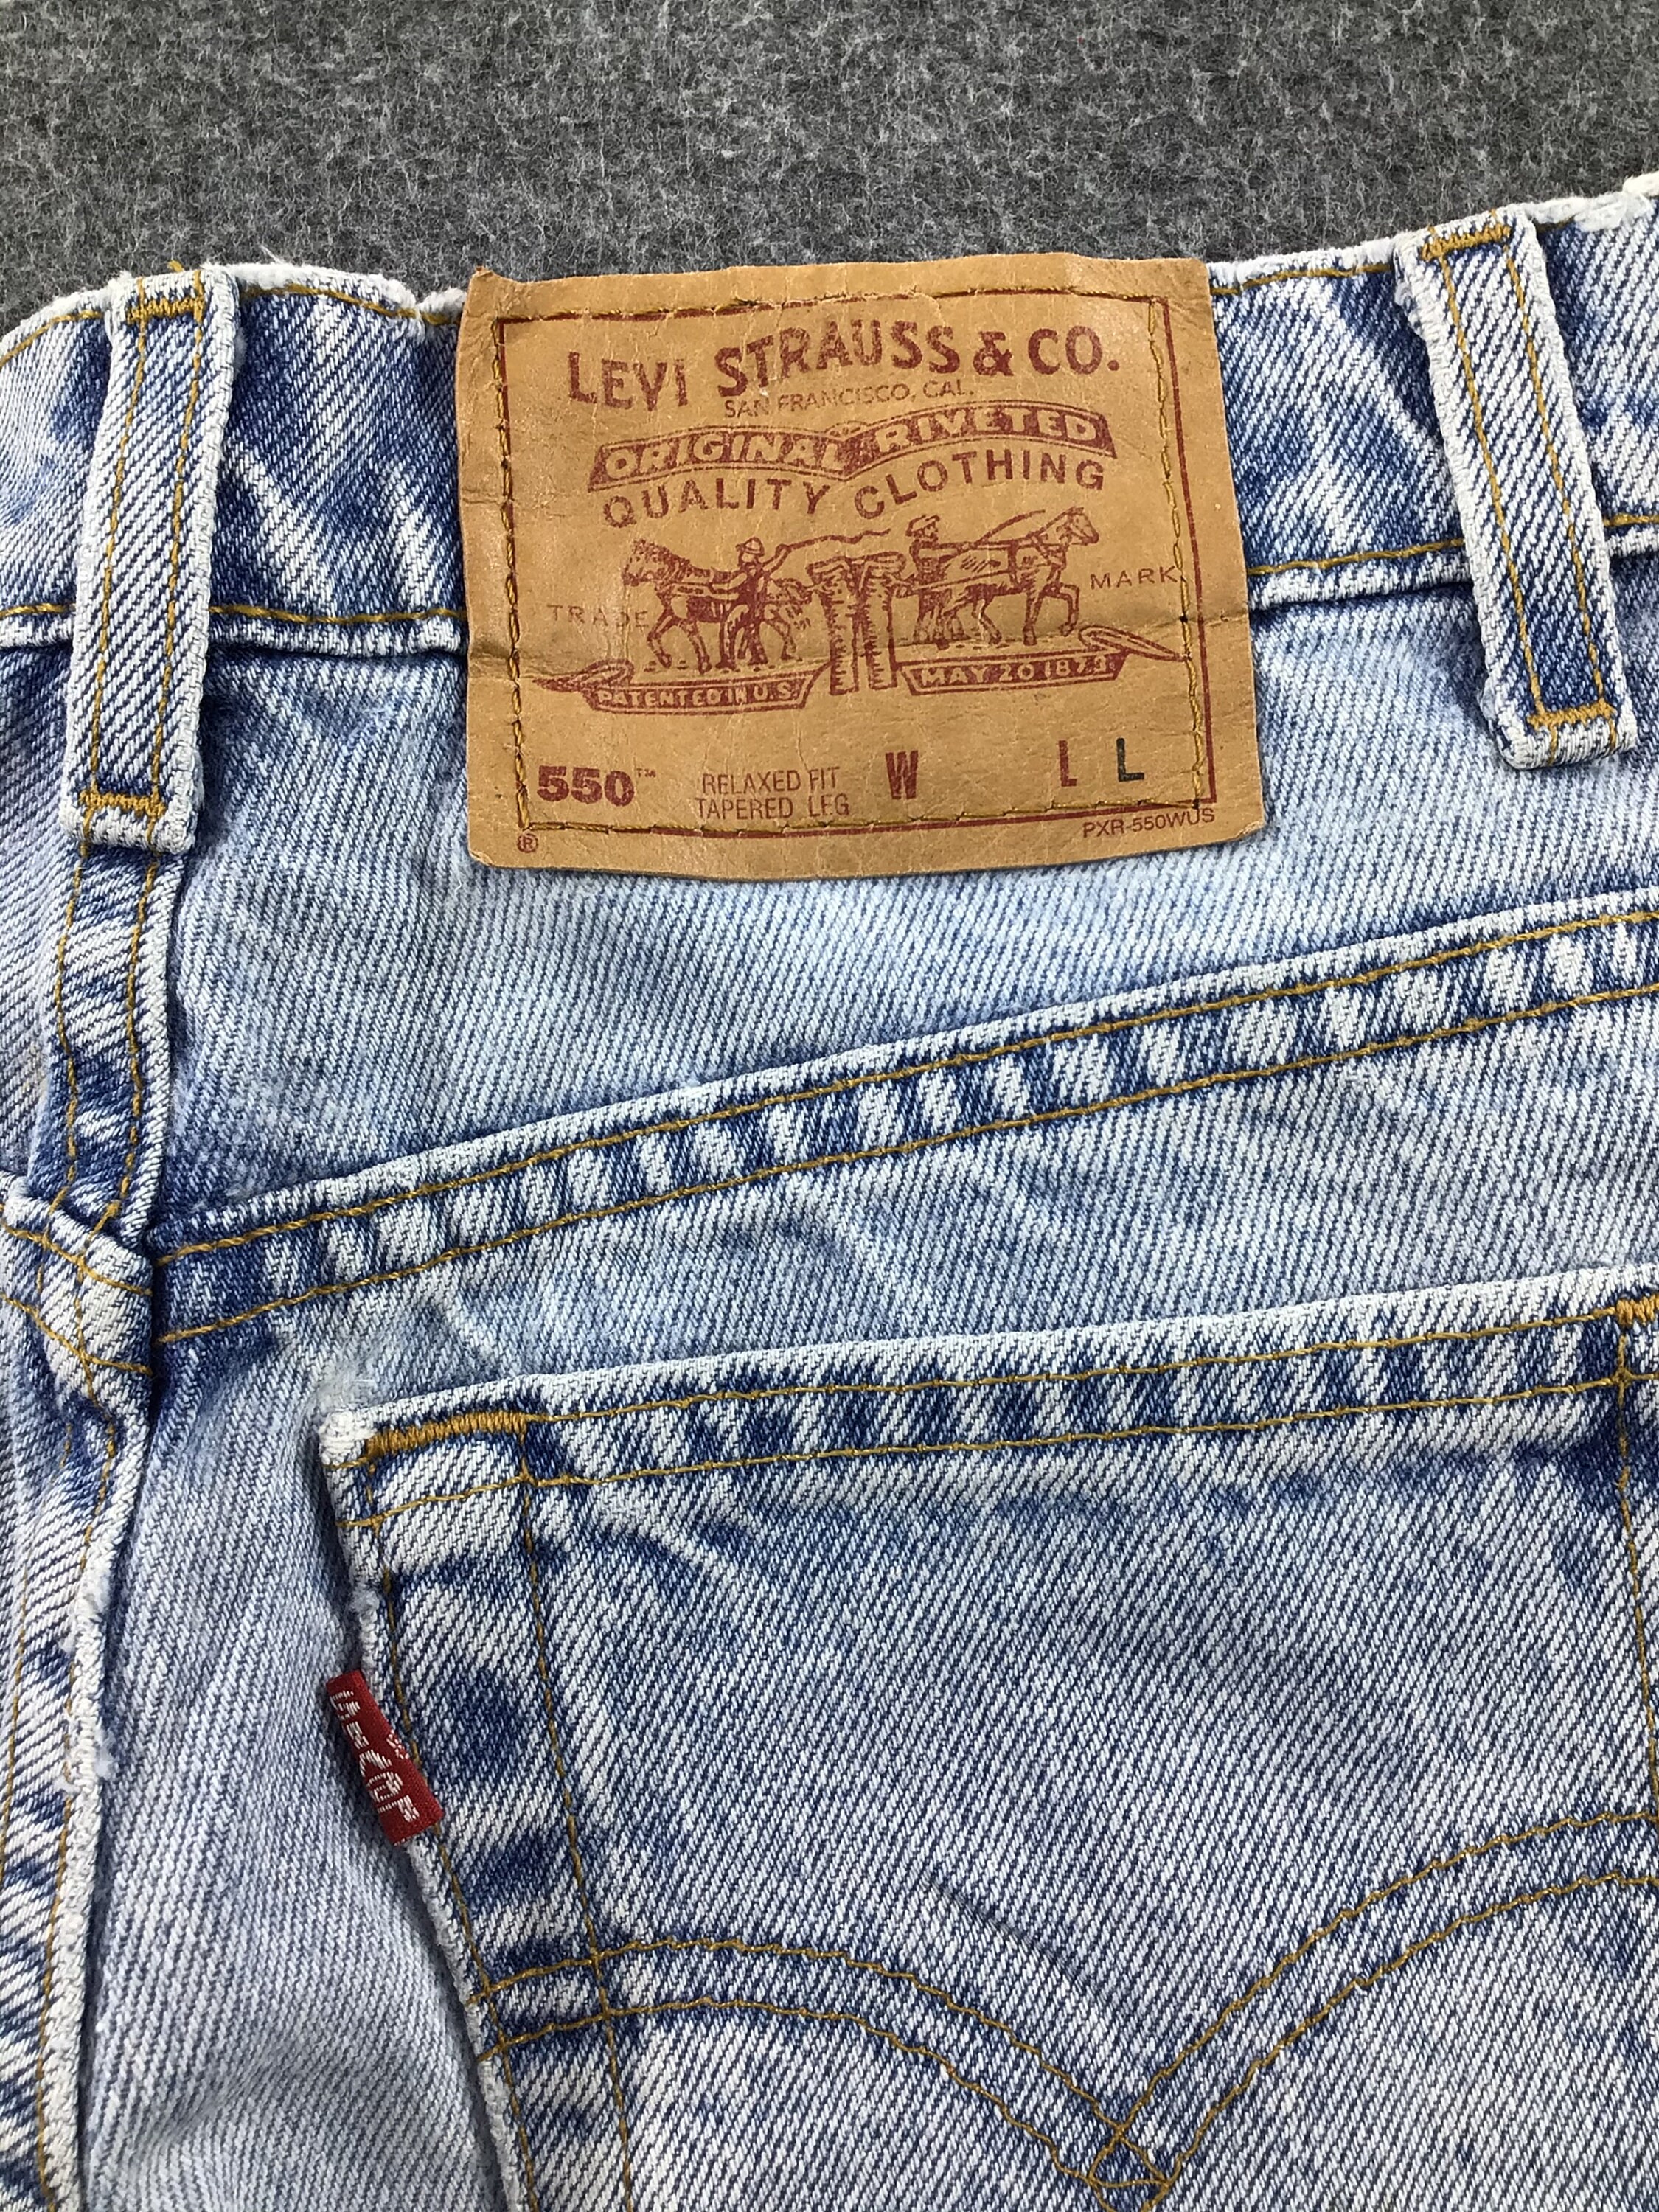 Vintage Levis 550 Jeans 28x28 Red Tab Faded Denim Grunge | Etsy